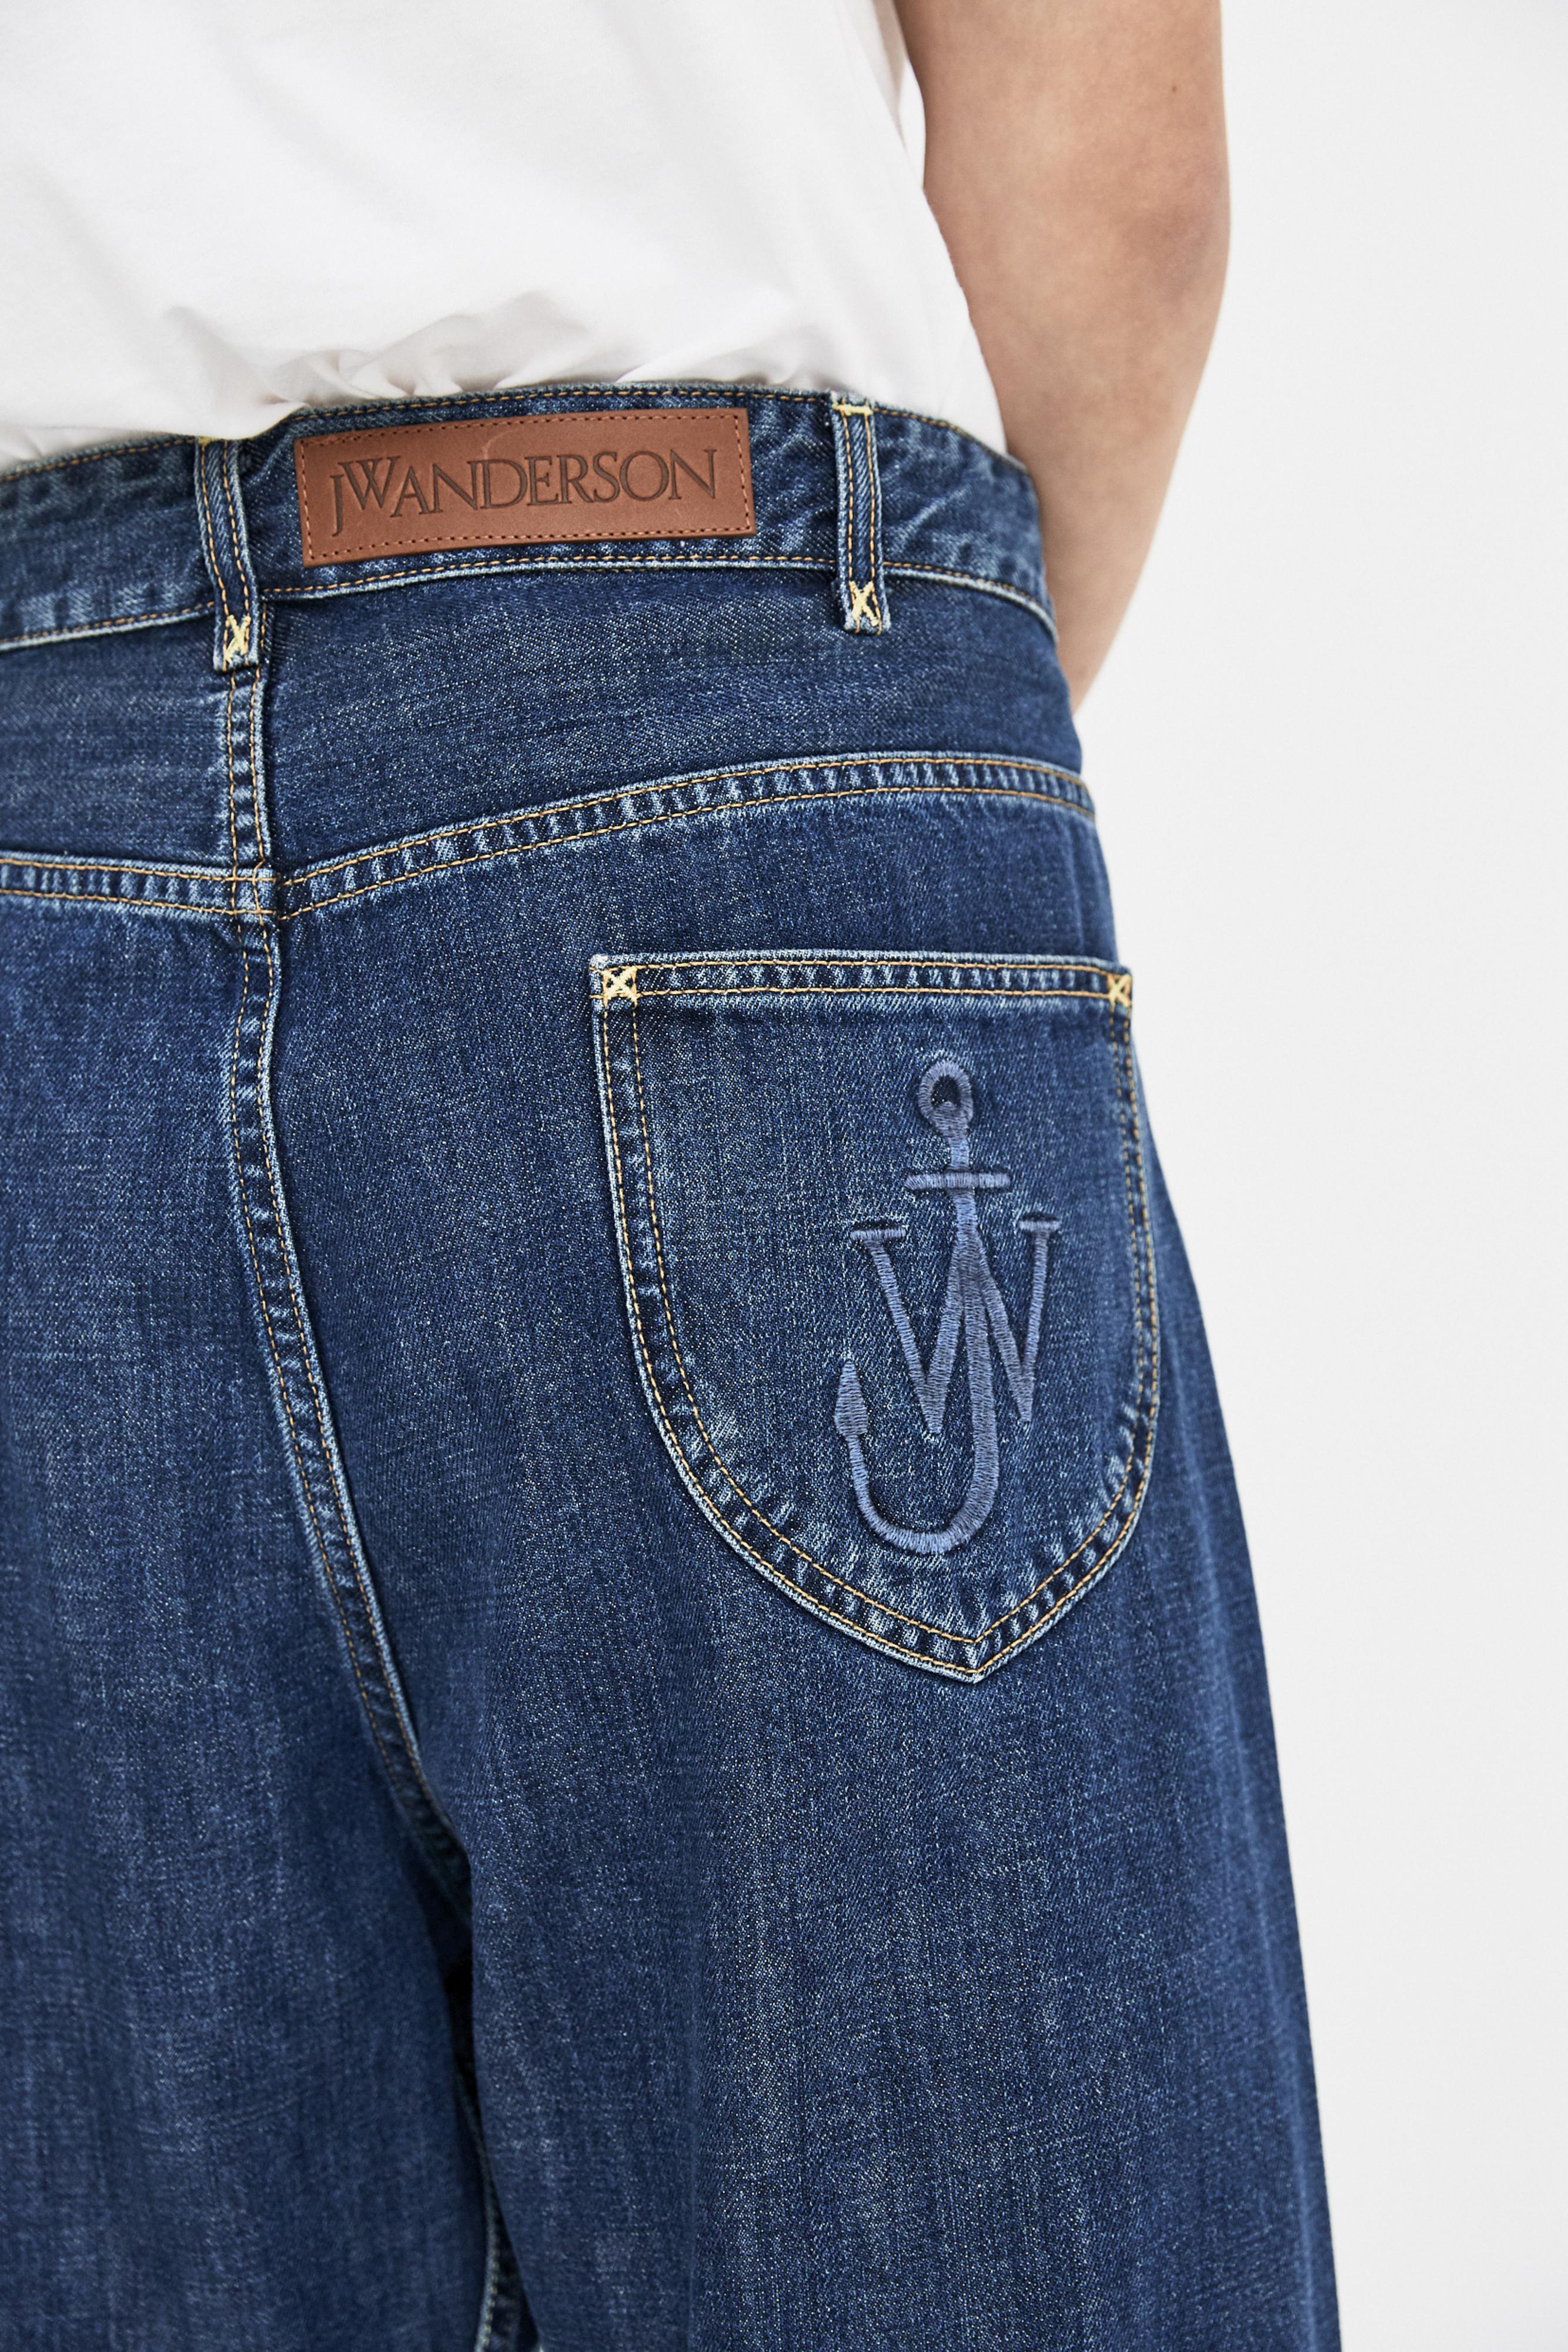 JW Anderson Denim Fold Front Jeans in Blue for Men - Lyst